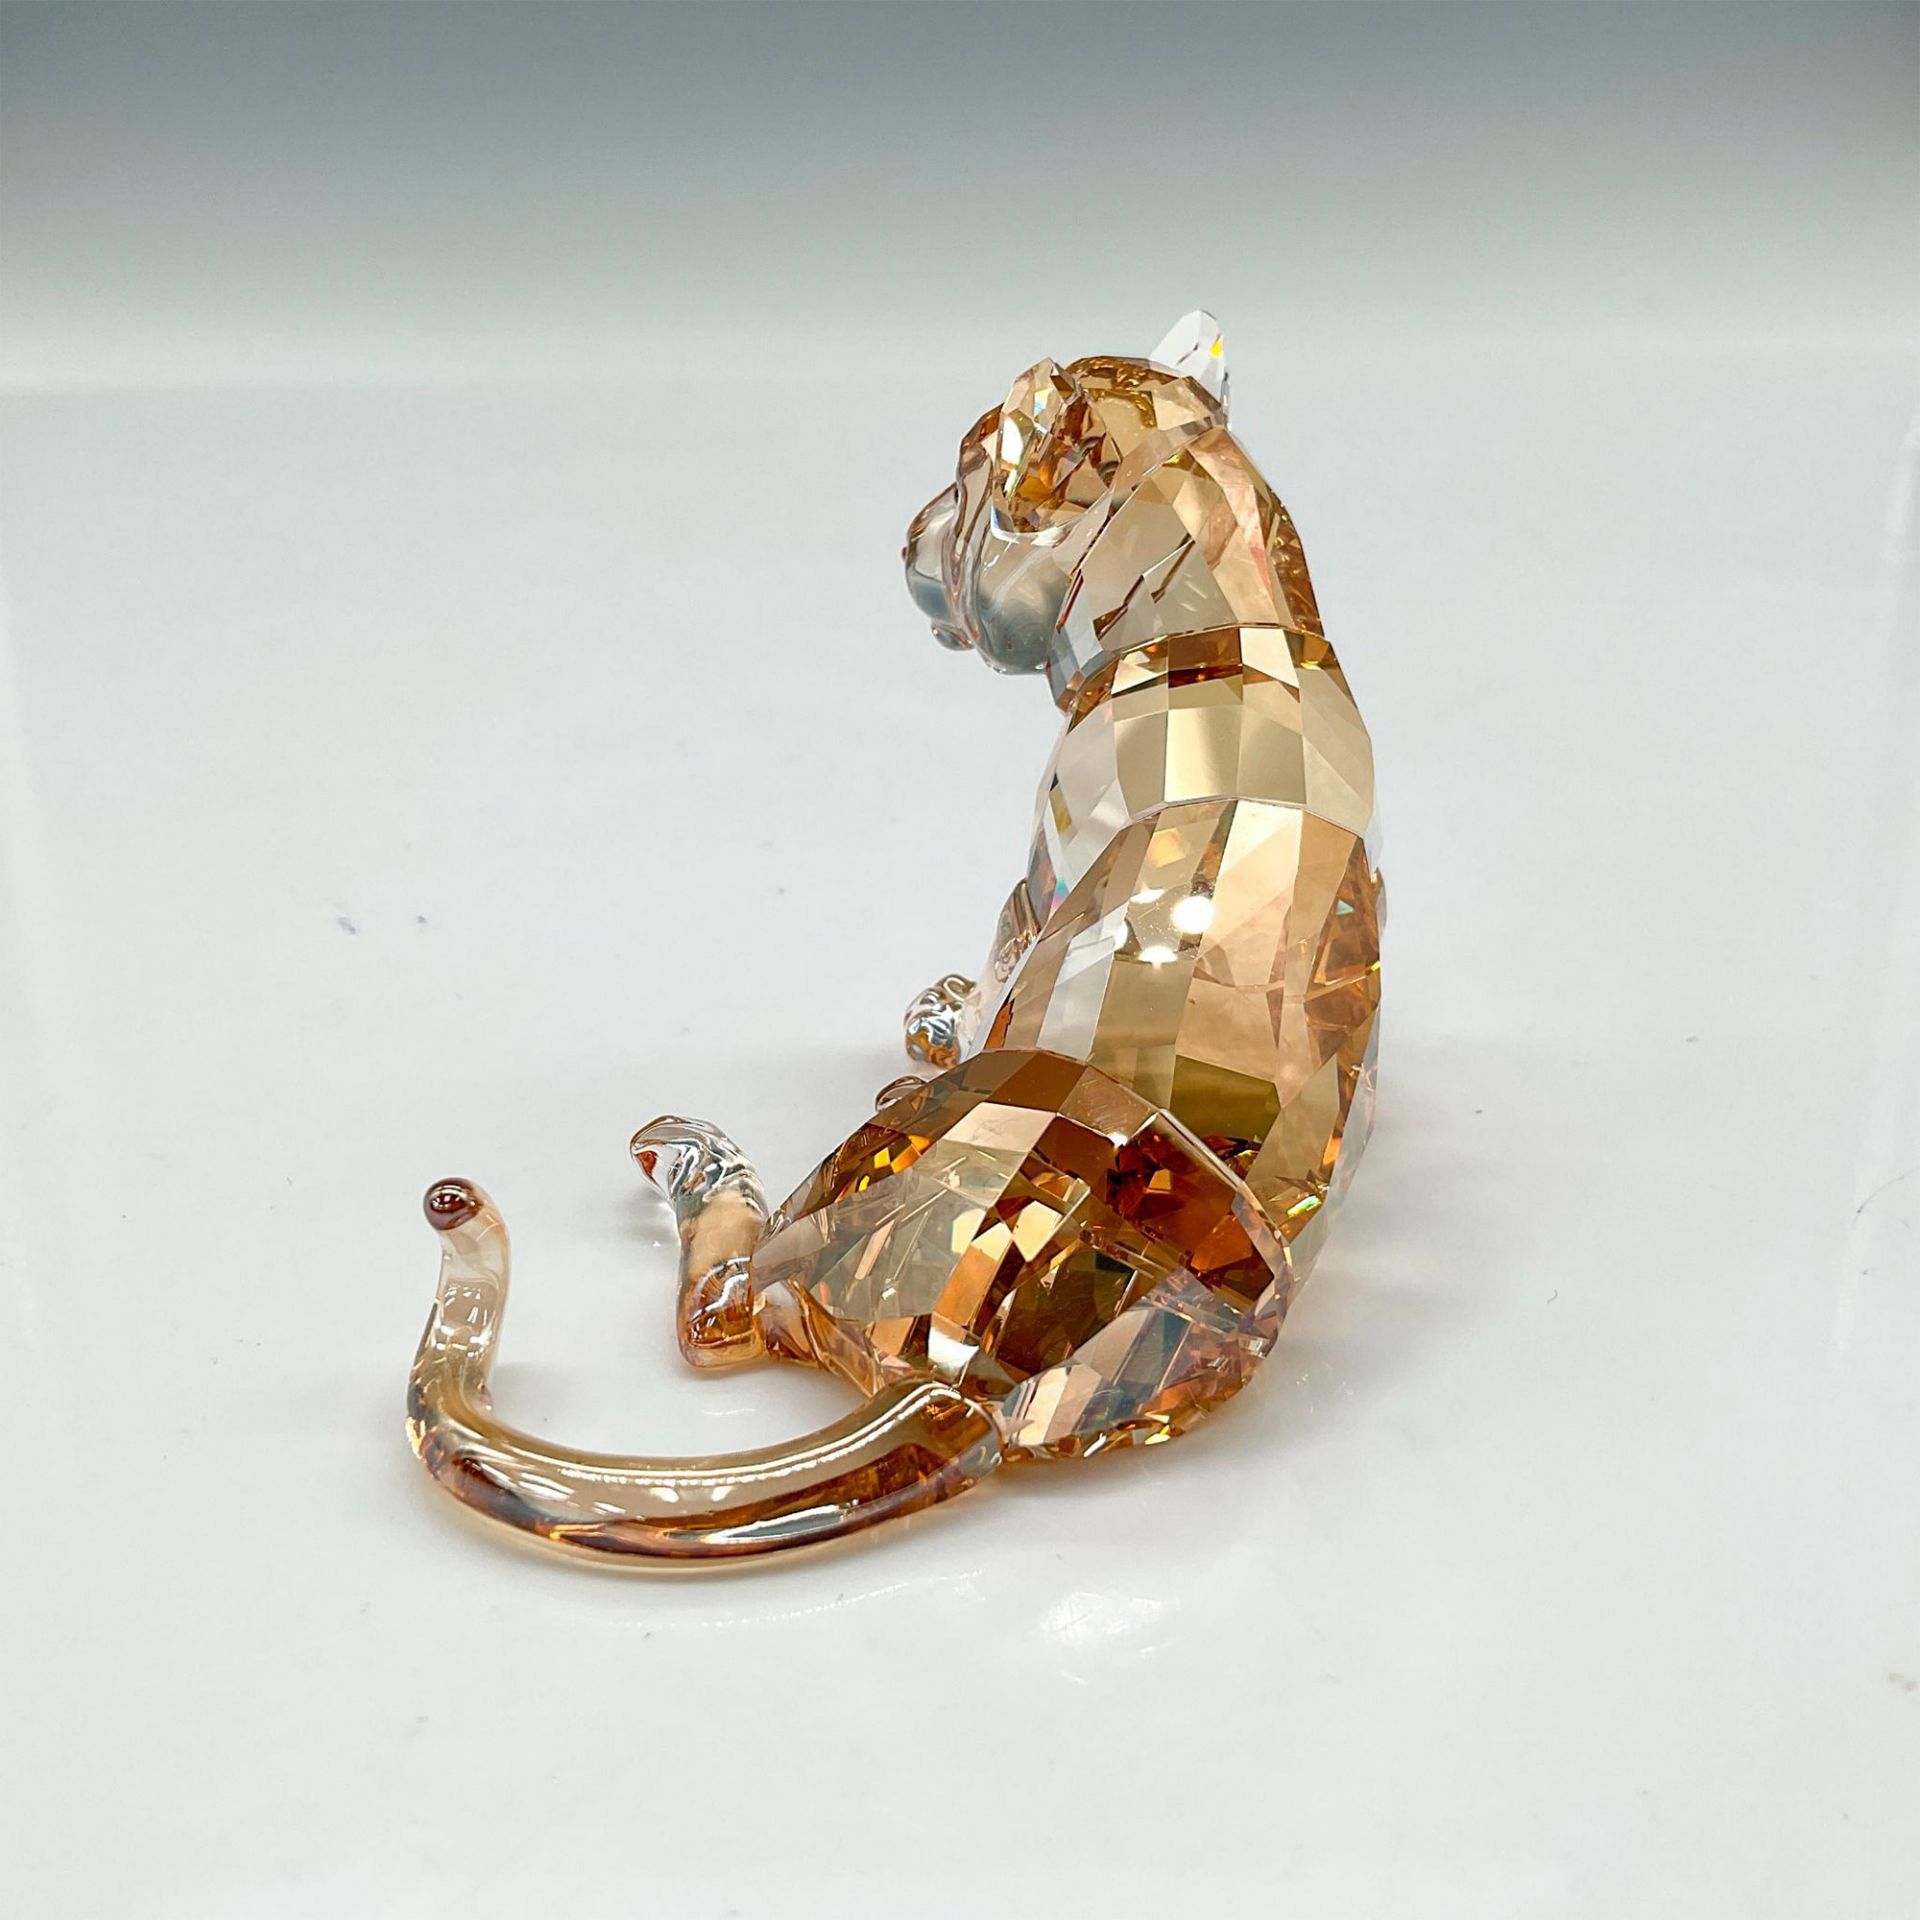 Swarovski Crystal Figurine, Tiger Cub Sitting - Image 2 of 4